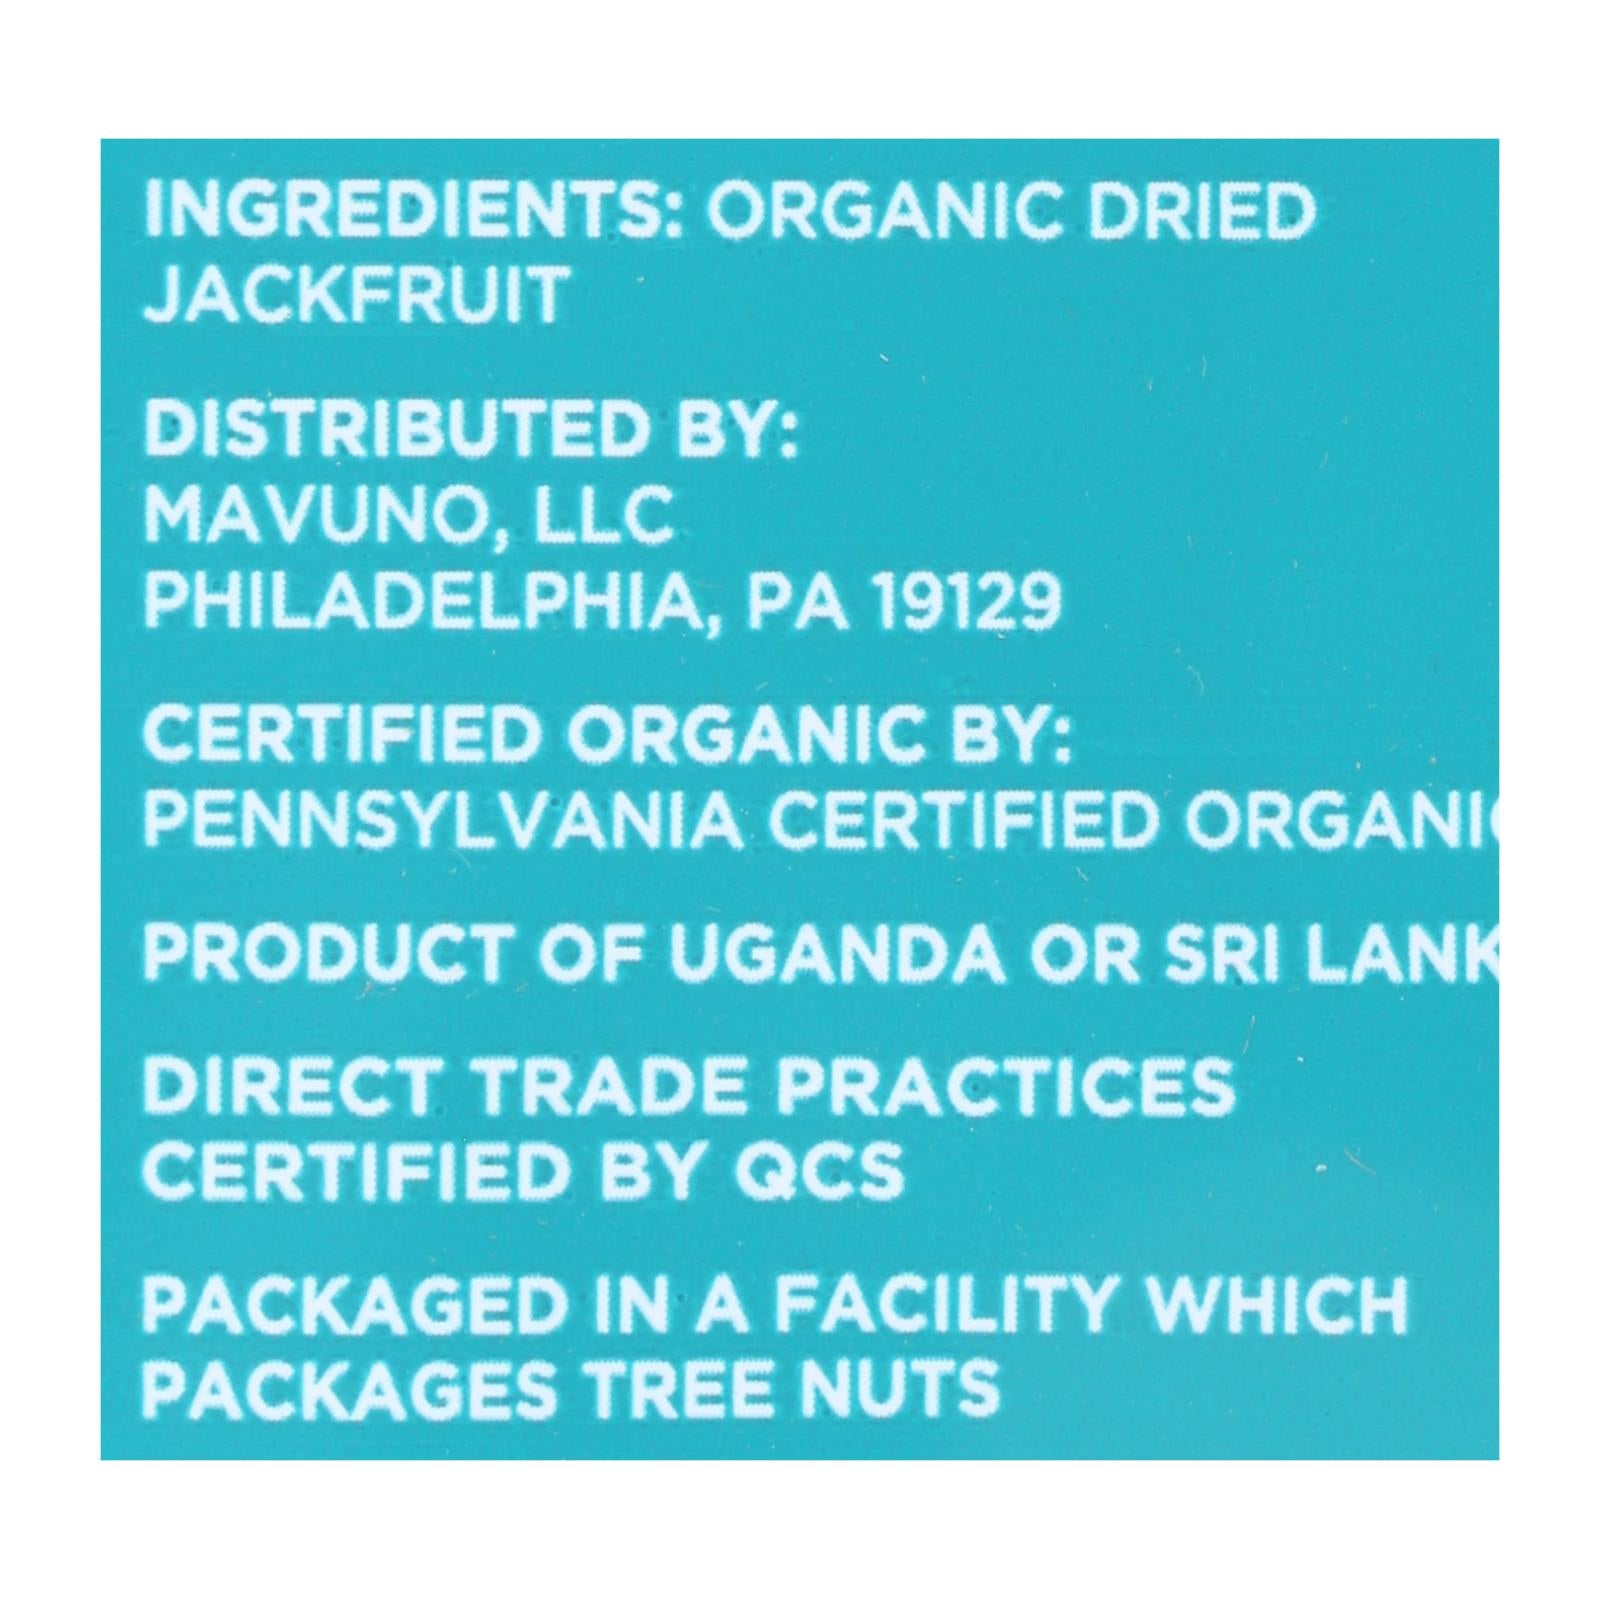 Mavuno Harvest Organic Dried Fruits - Jackfruit - Case Of 6 - 2 Oz.